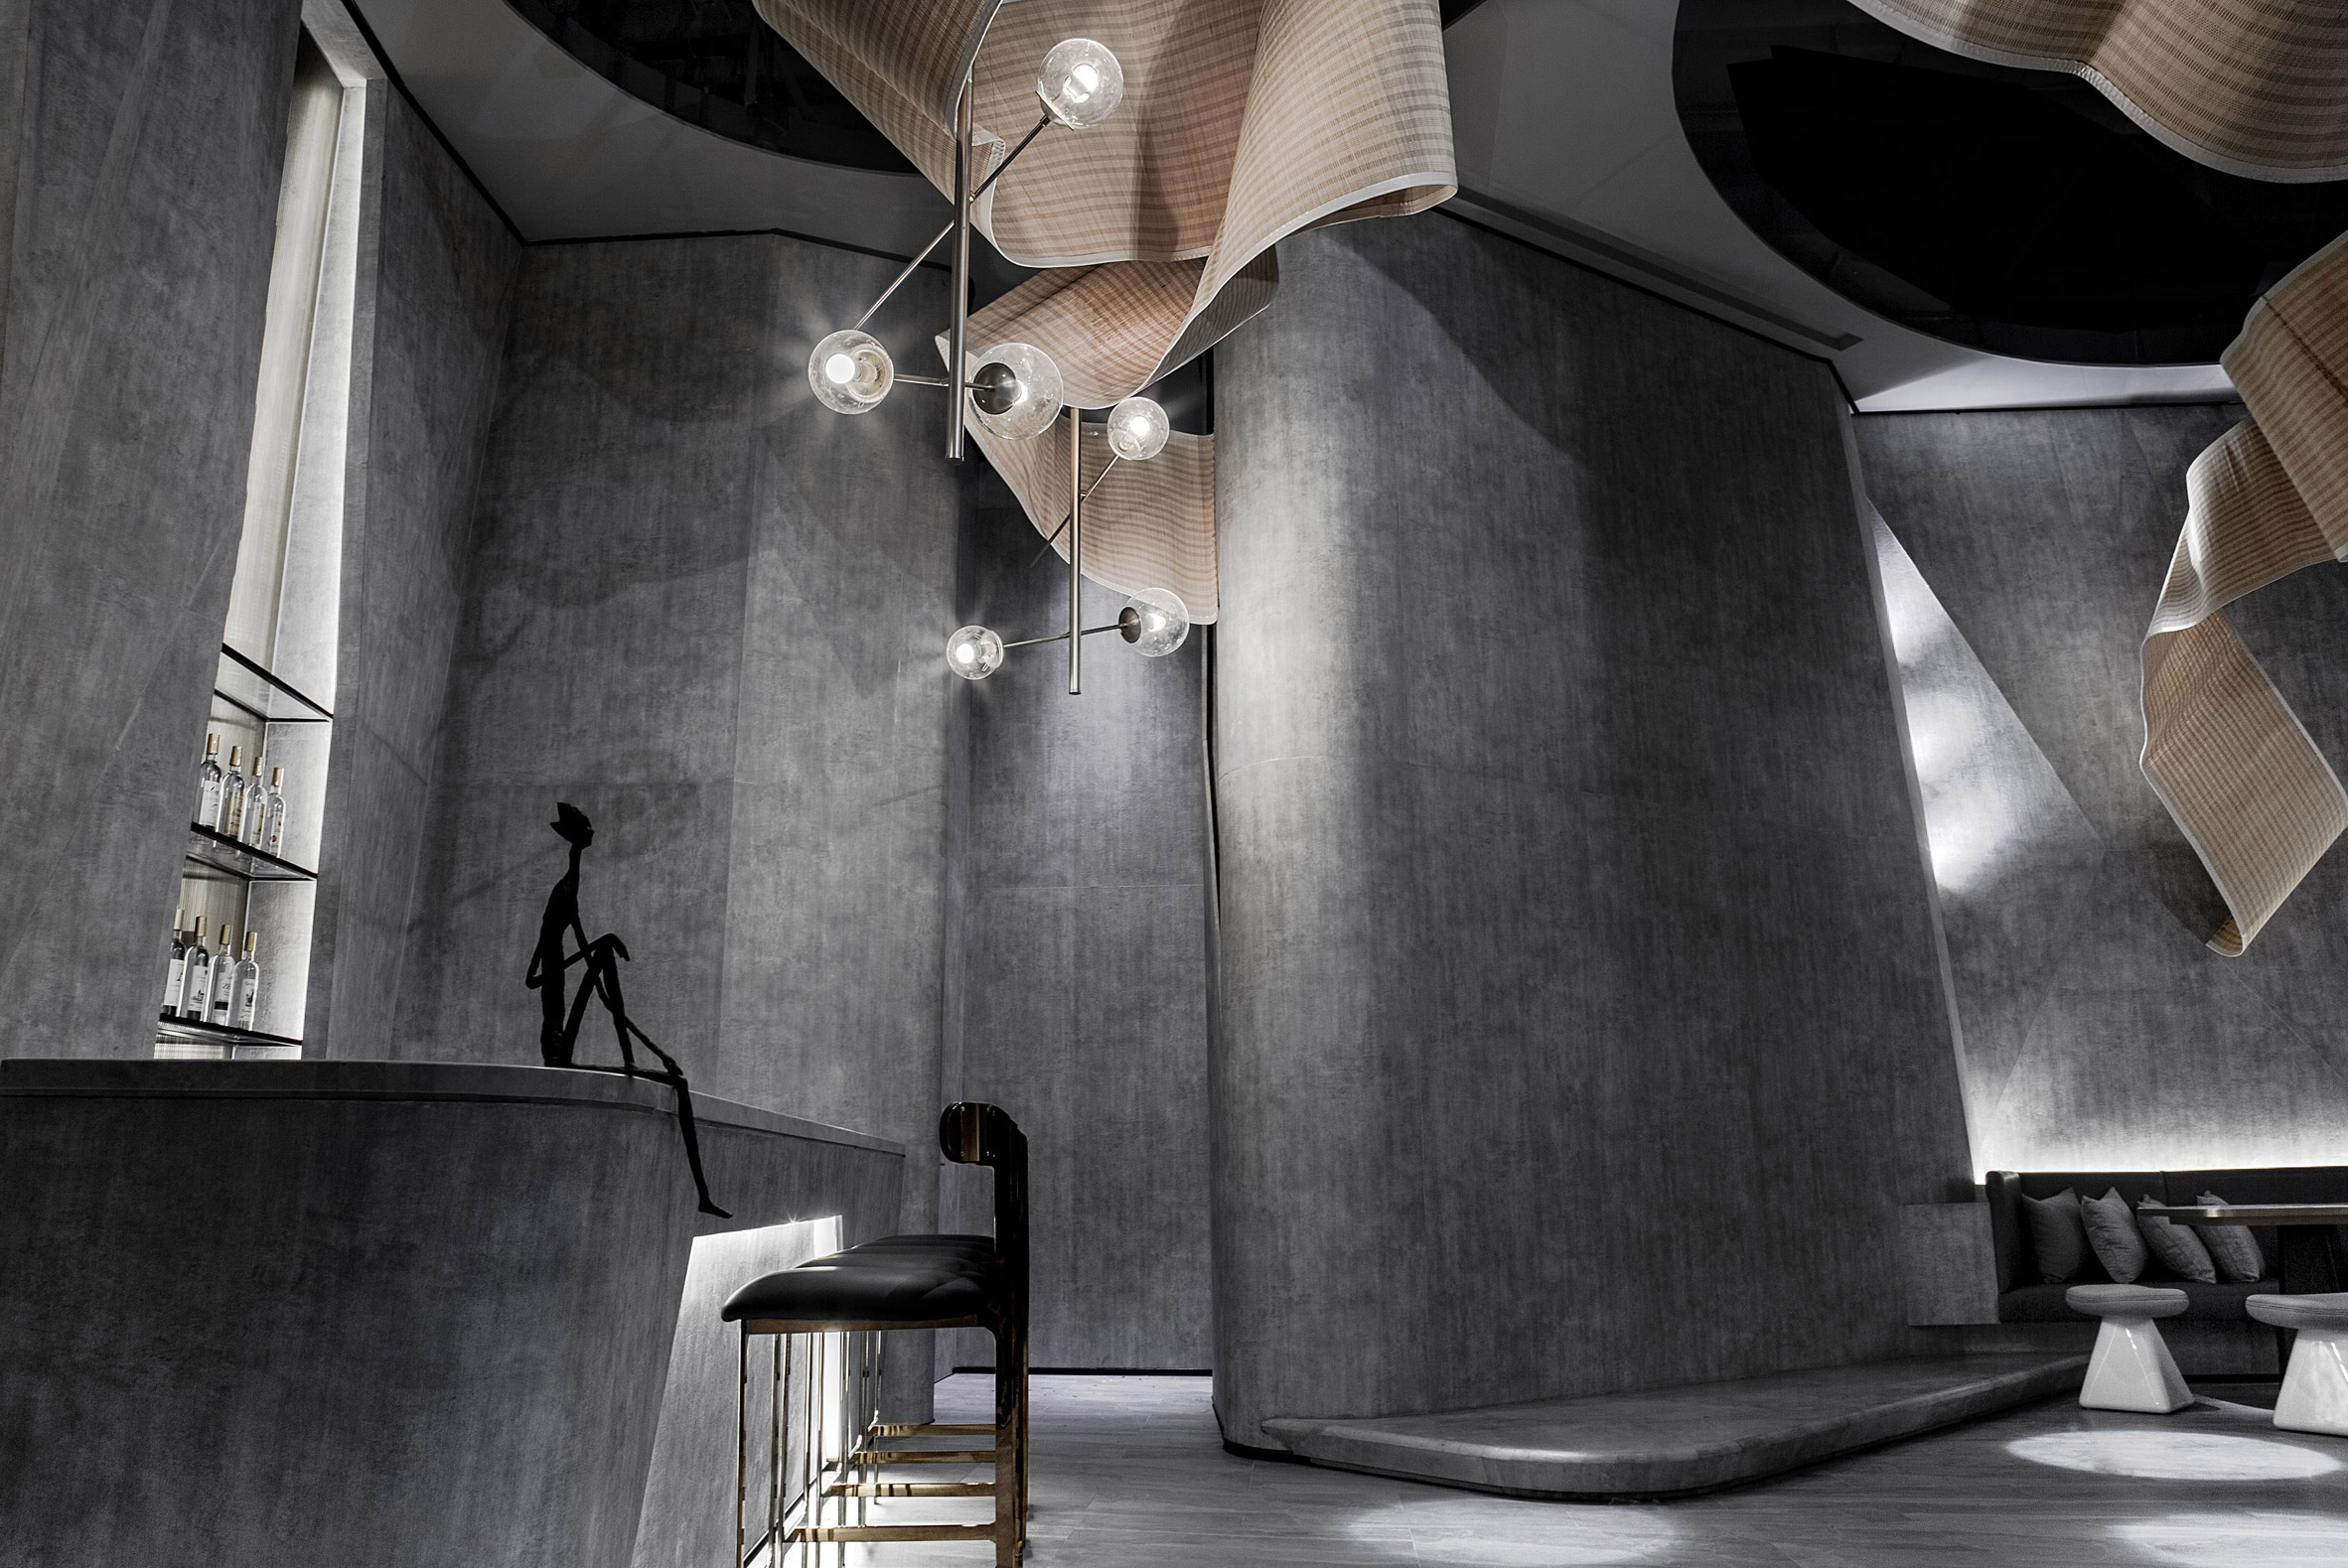 Sculptures inside The Flow of Ecstatic bar interiors by Daosheng Design